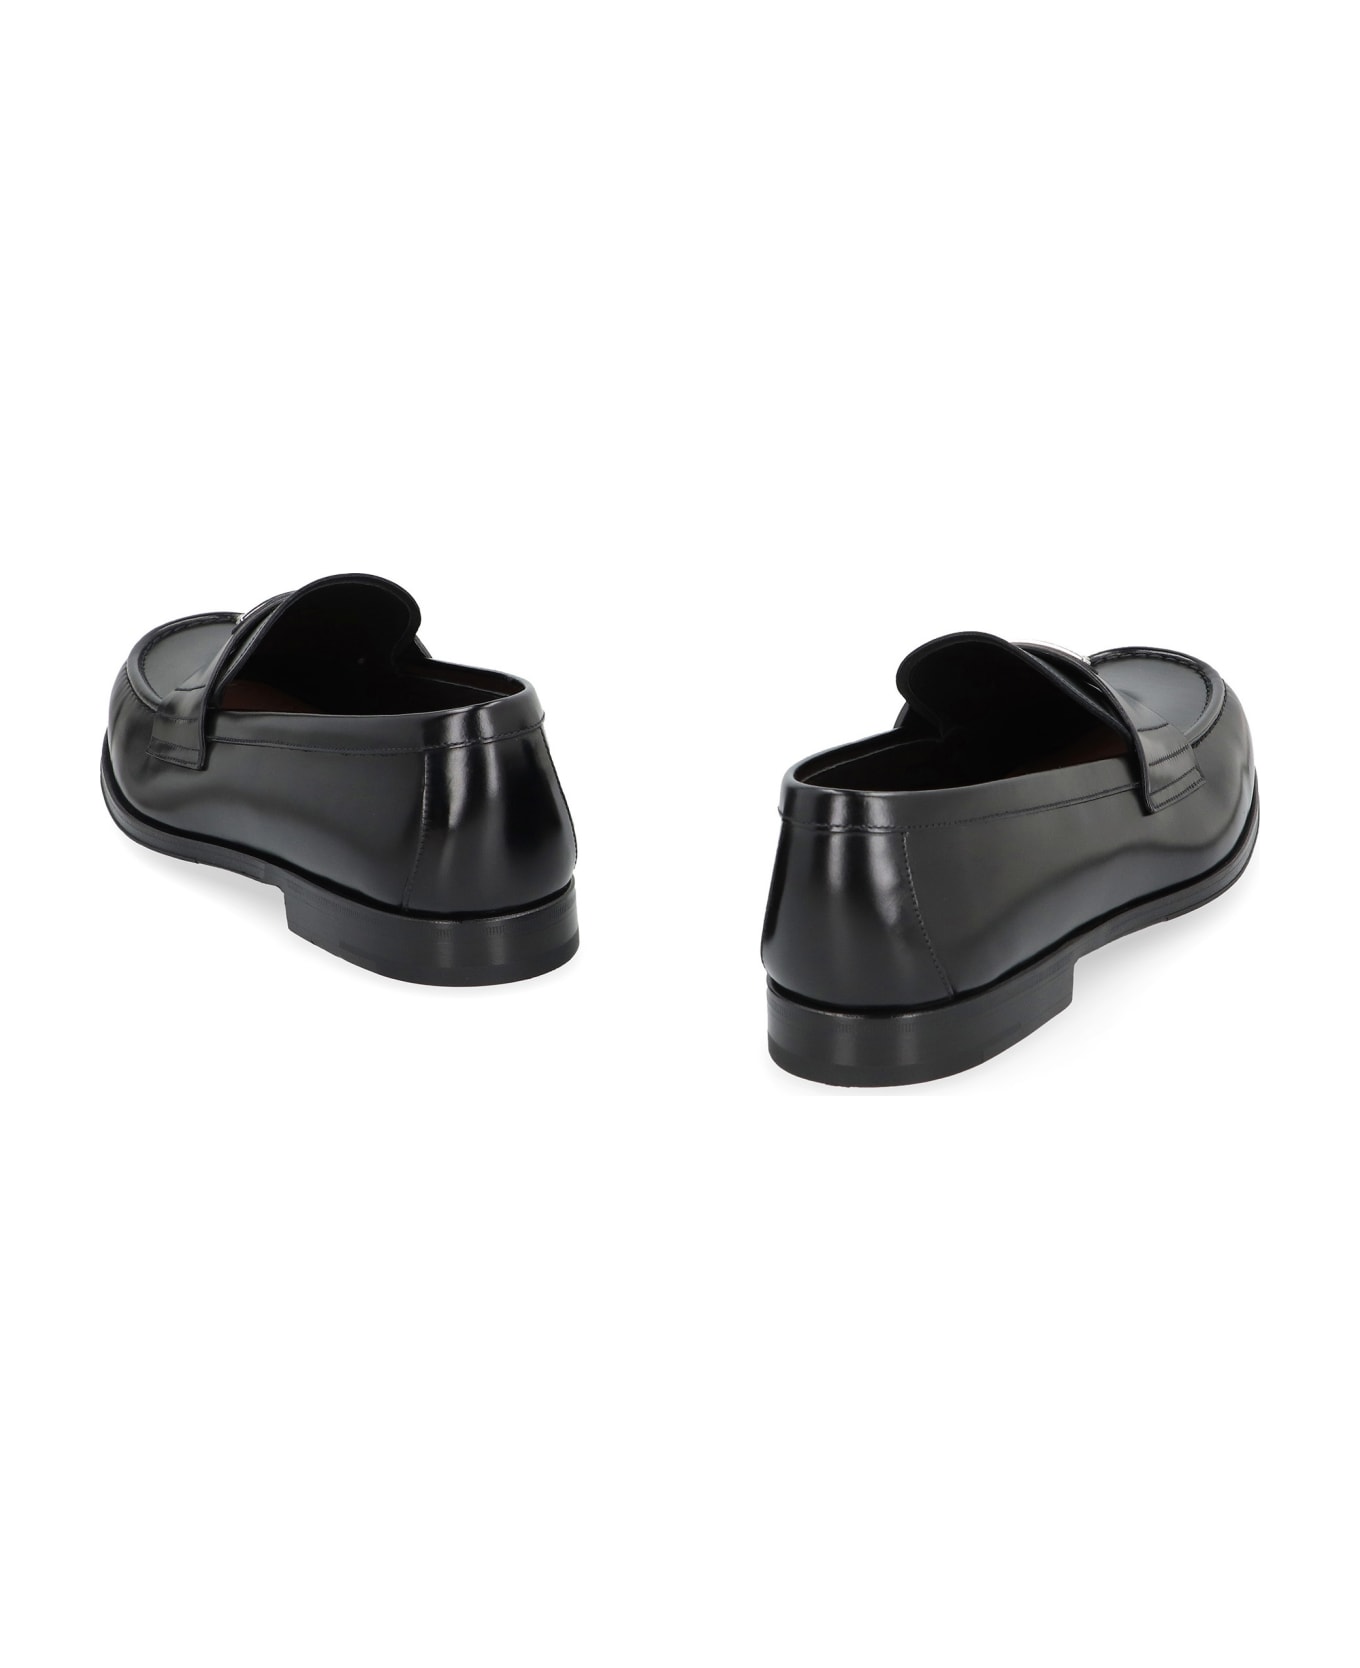 Prada Brushed Leather Loafers - black